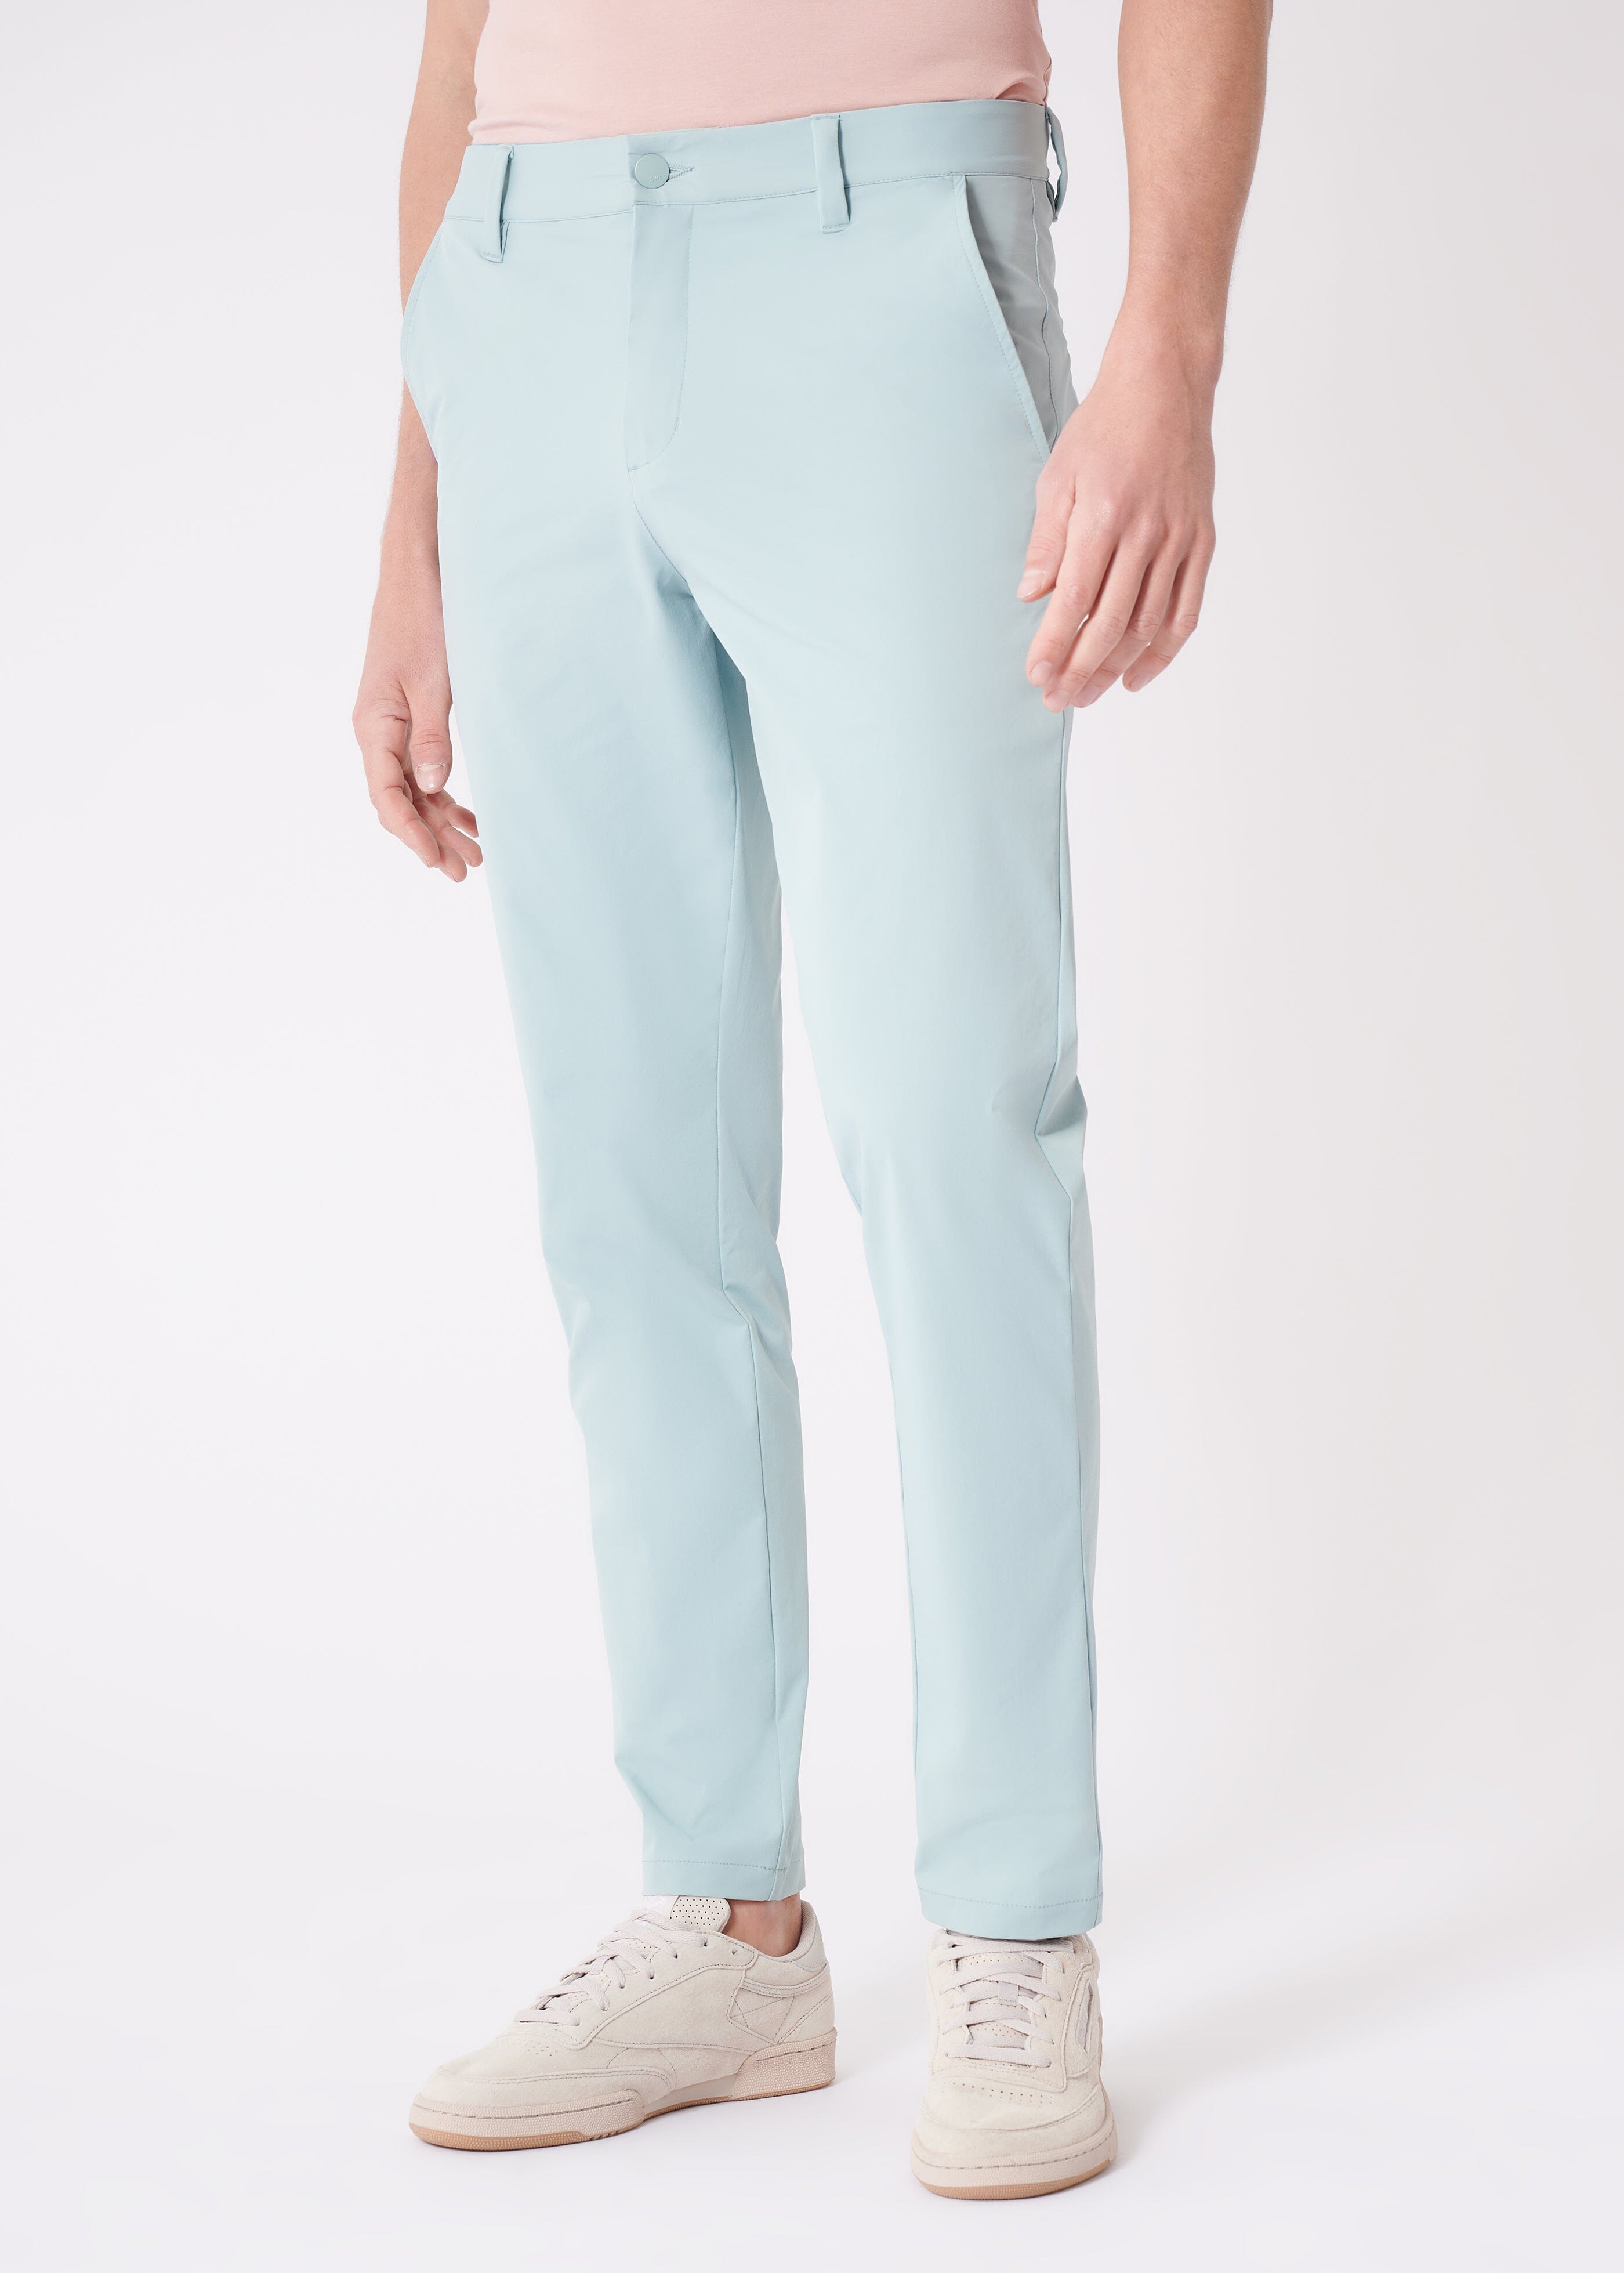 Seafoam Green Stretch Tech Pants, Virtus Pant | Swet Tailor®